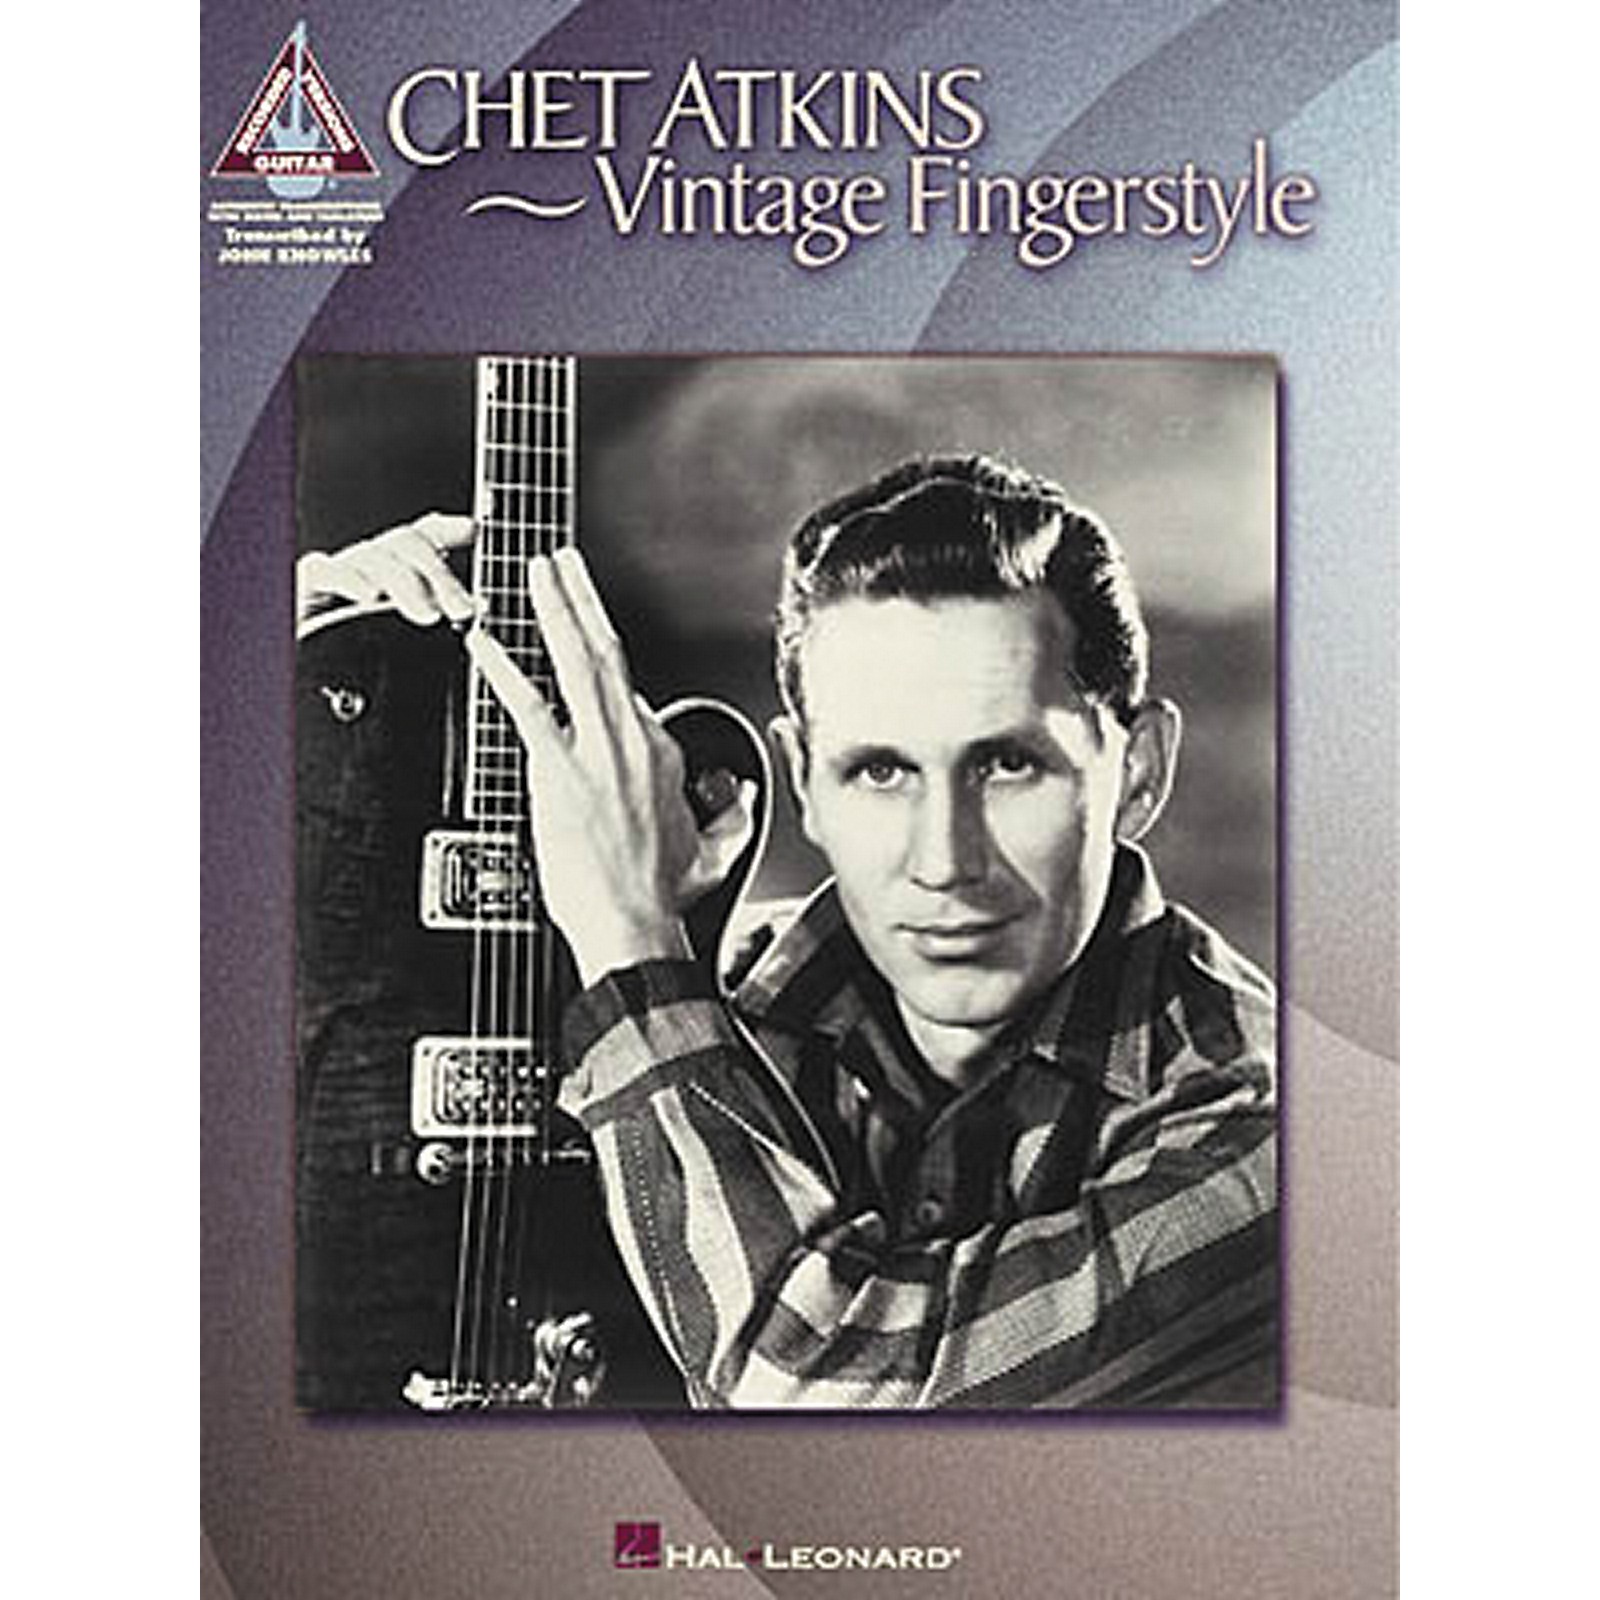 Buy Chet Atkins Sheet music - Atkins, Chet music scores